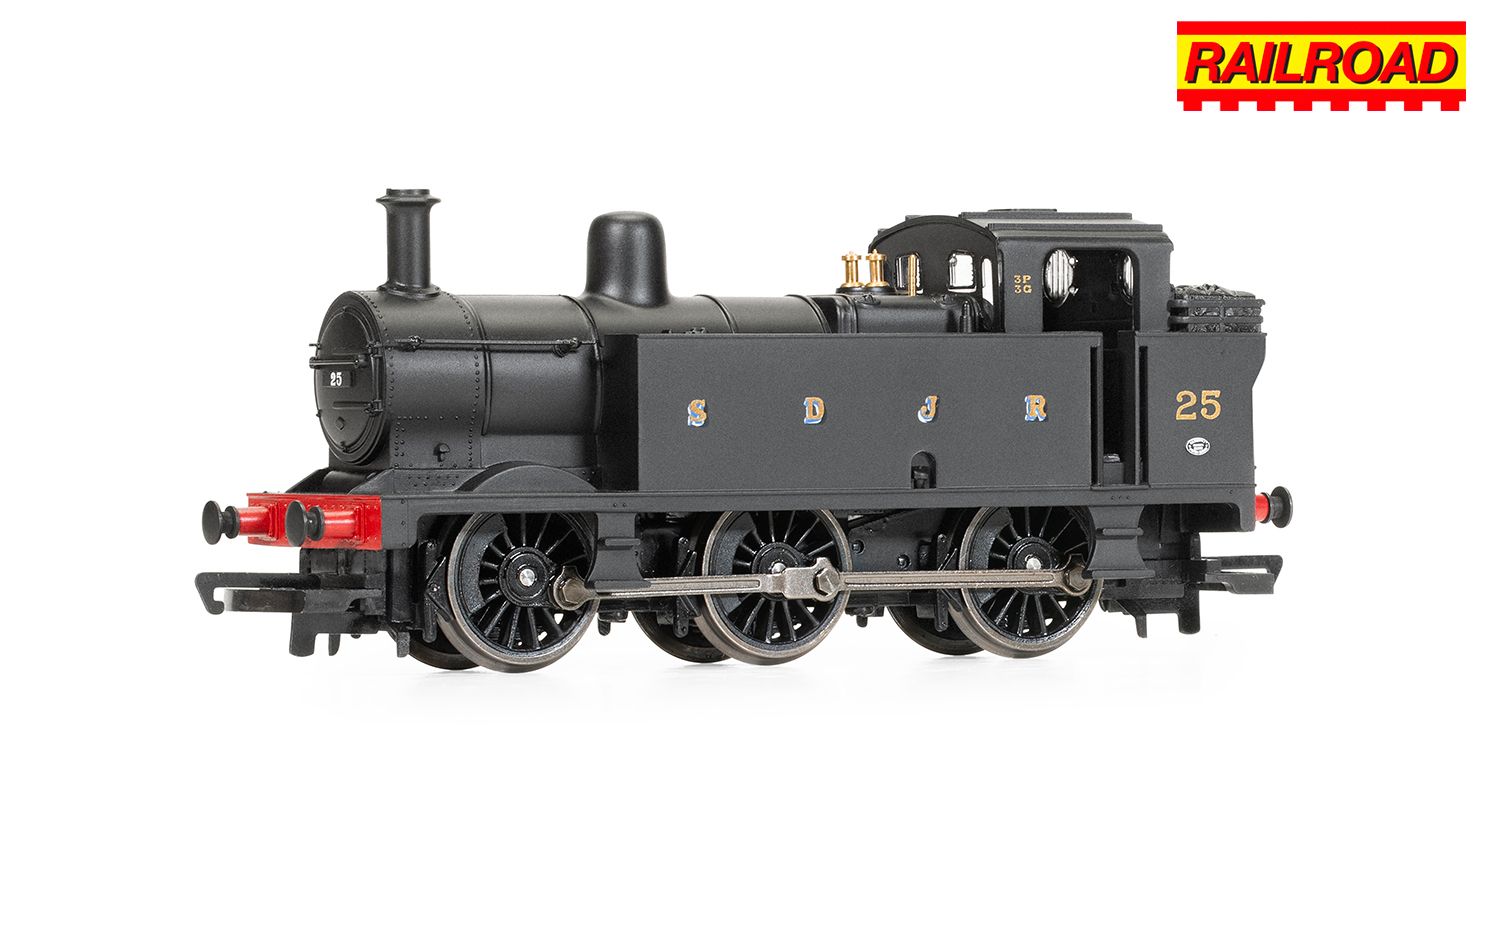 R30325 Hornby RailRoad S&DJR, Class 3F 'Jinty', 0-6-0, No. 25 - Era 2